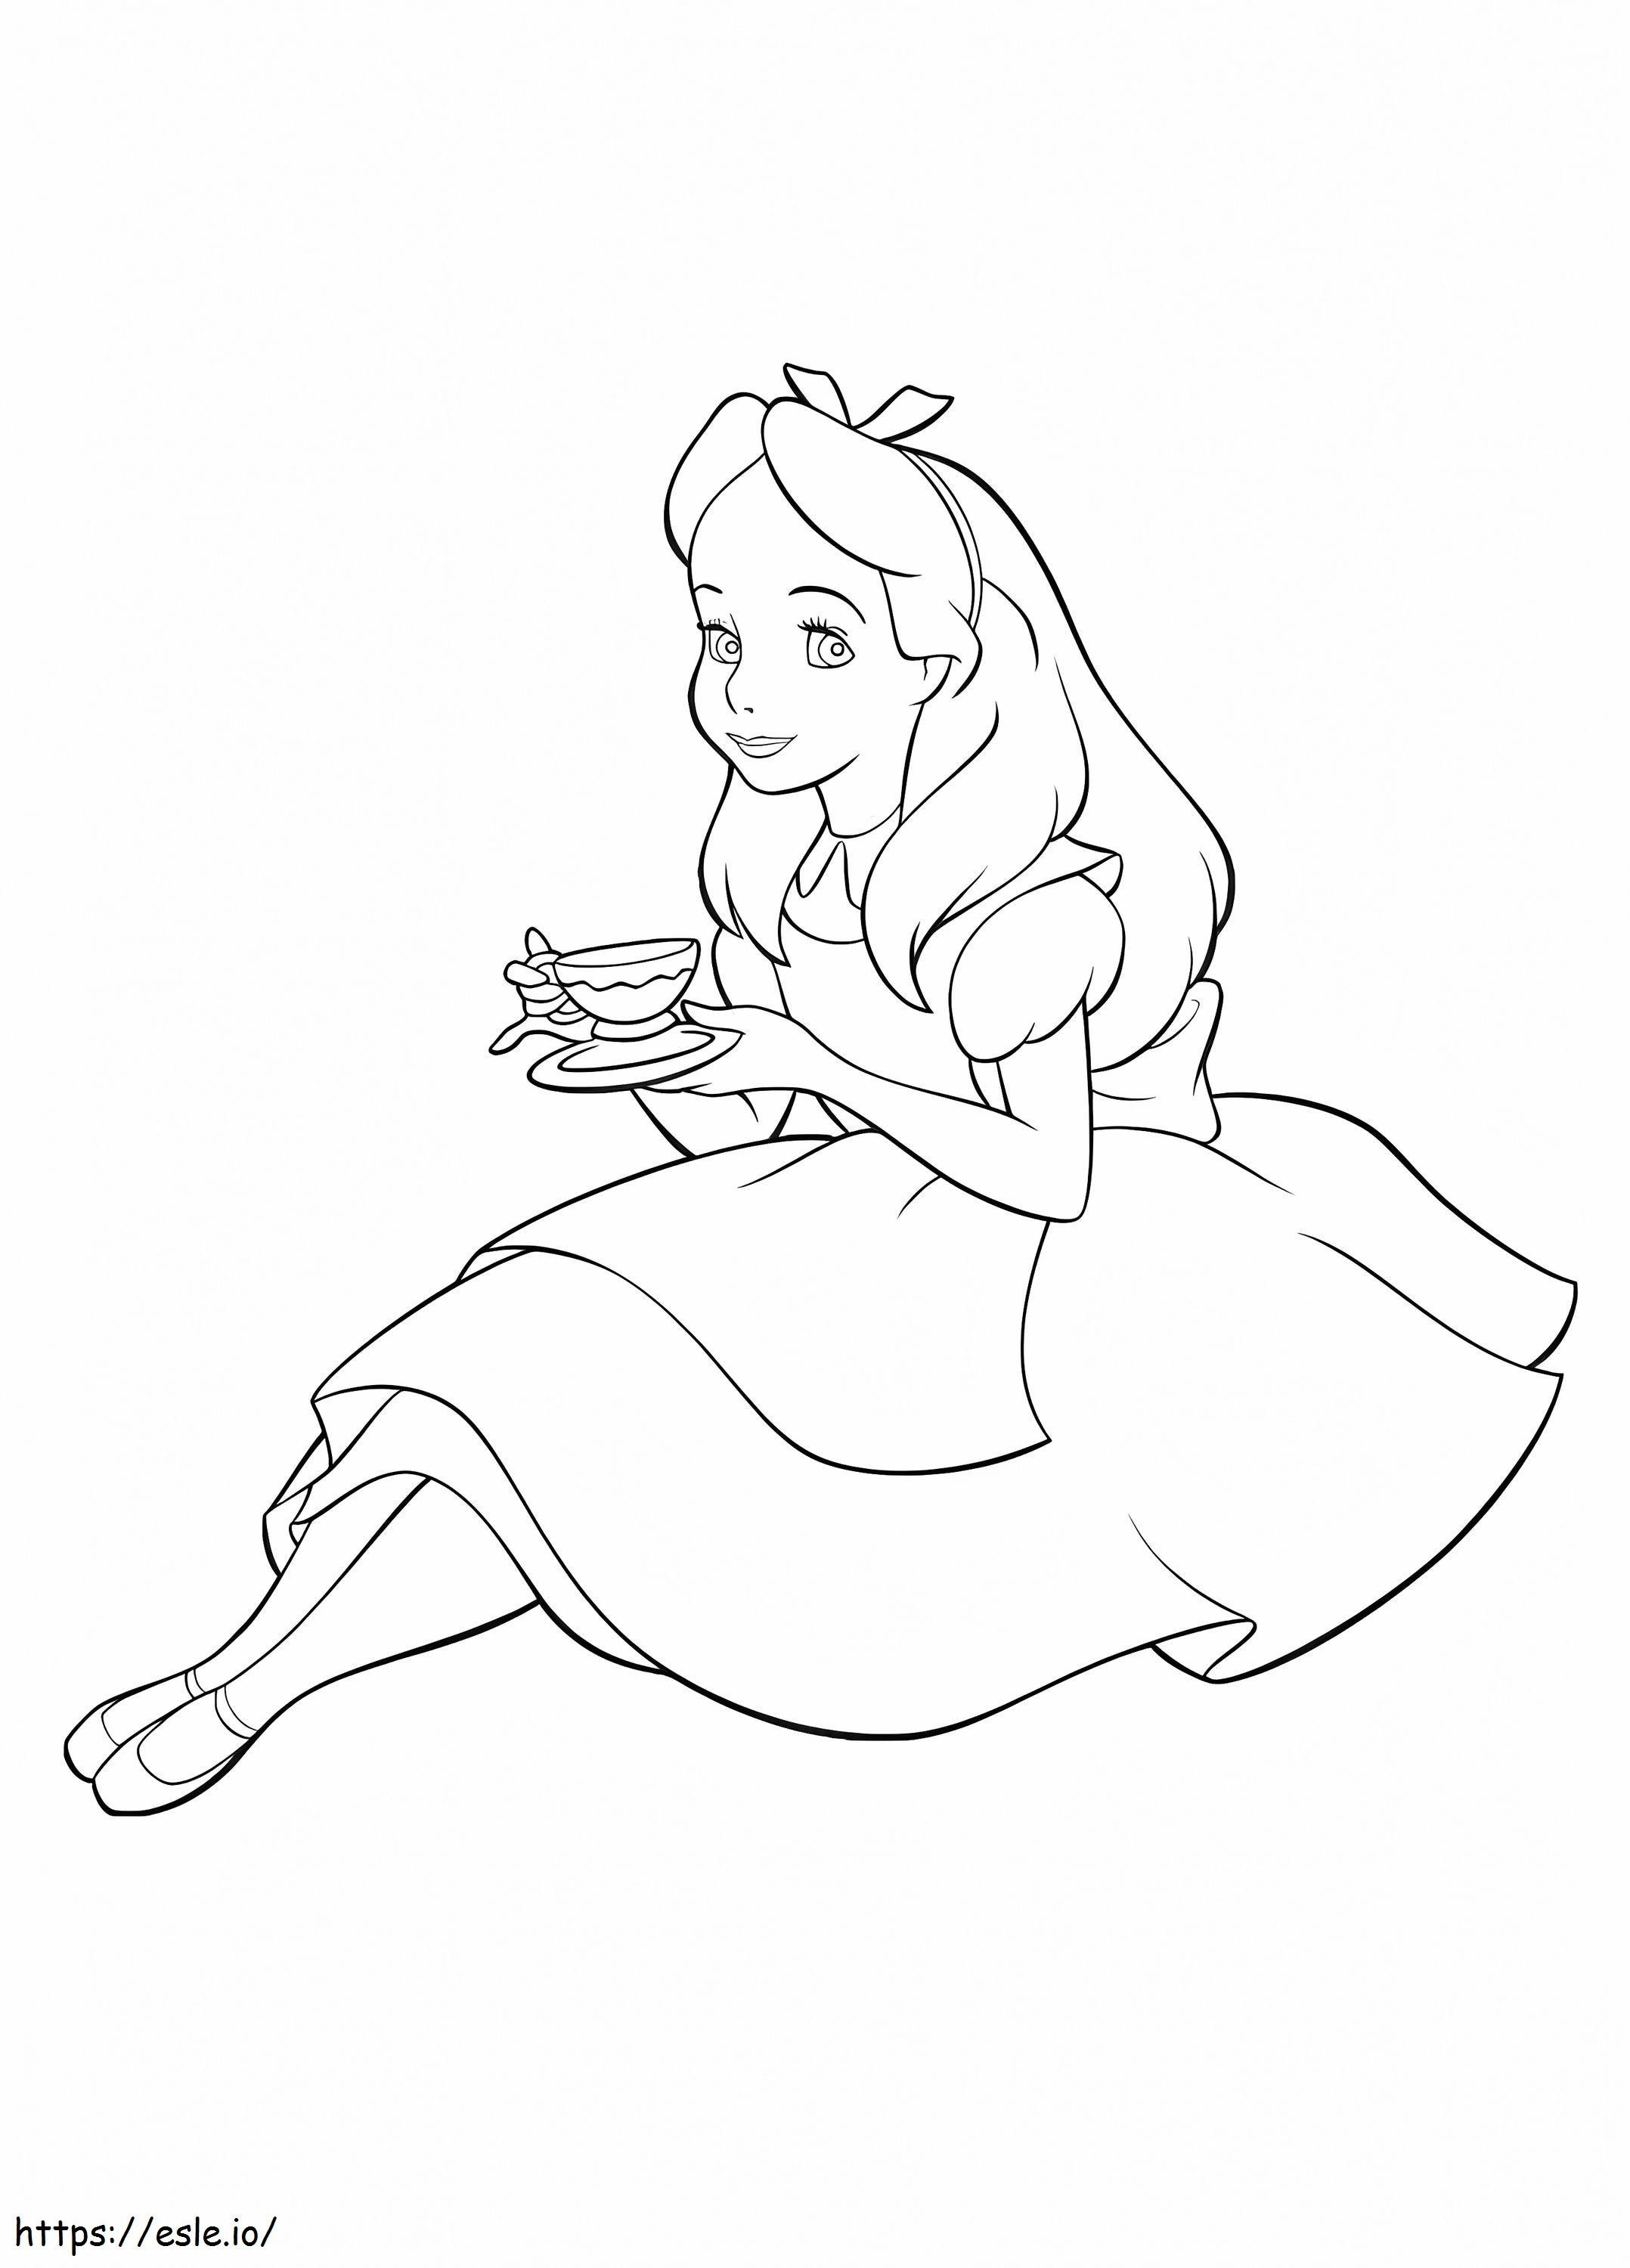 Alice trinkt Tee ausmalbilder